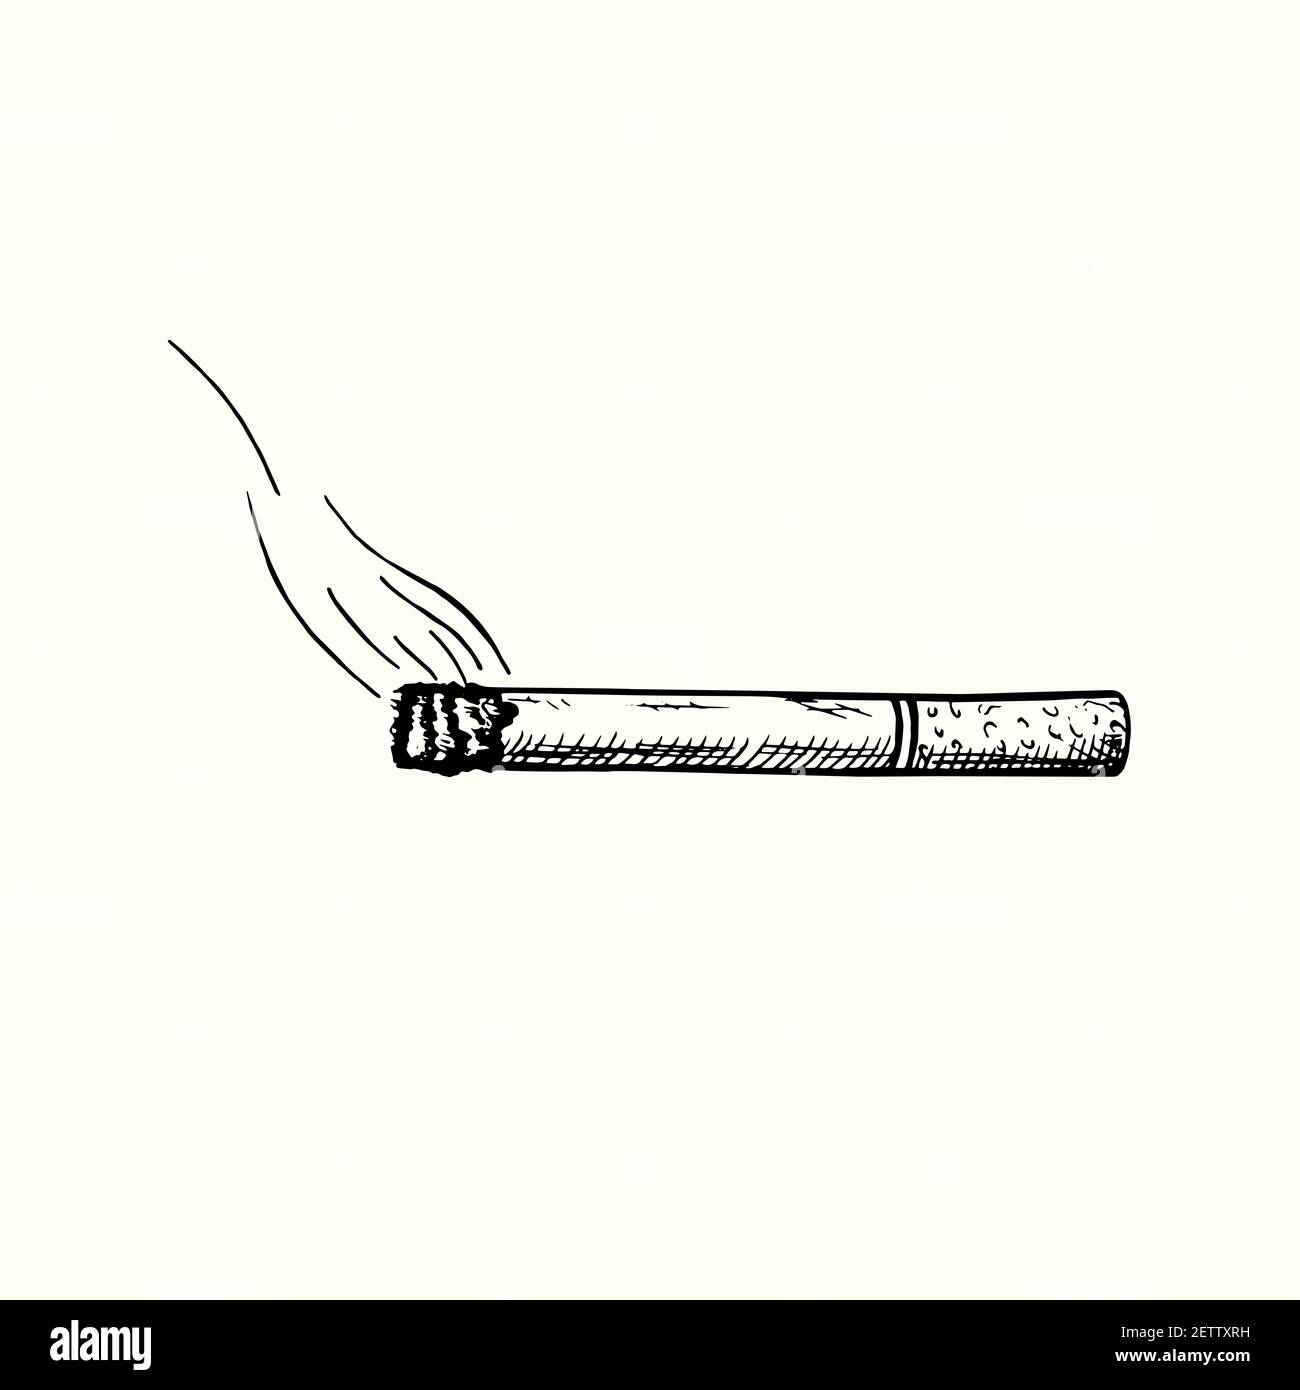 Dibujo de cigarrillo fotografías e imágenes de alta resolución - Alamy